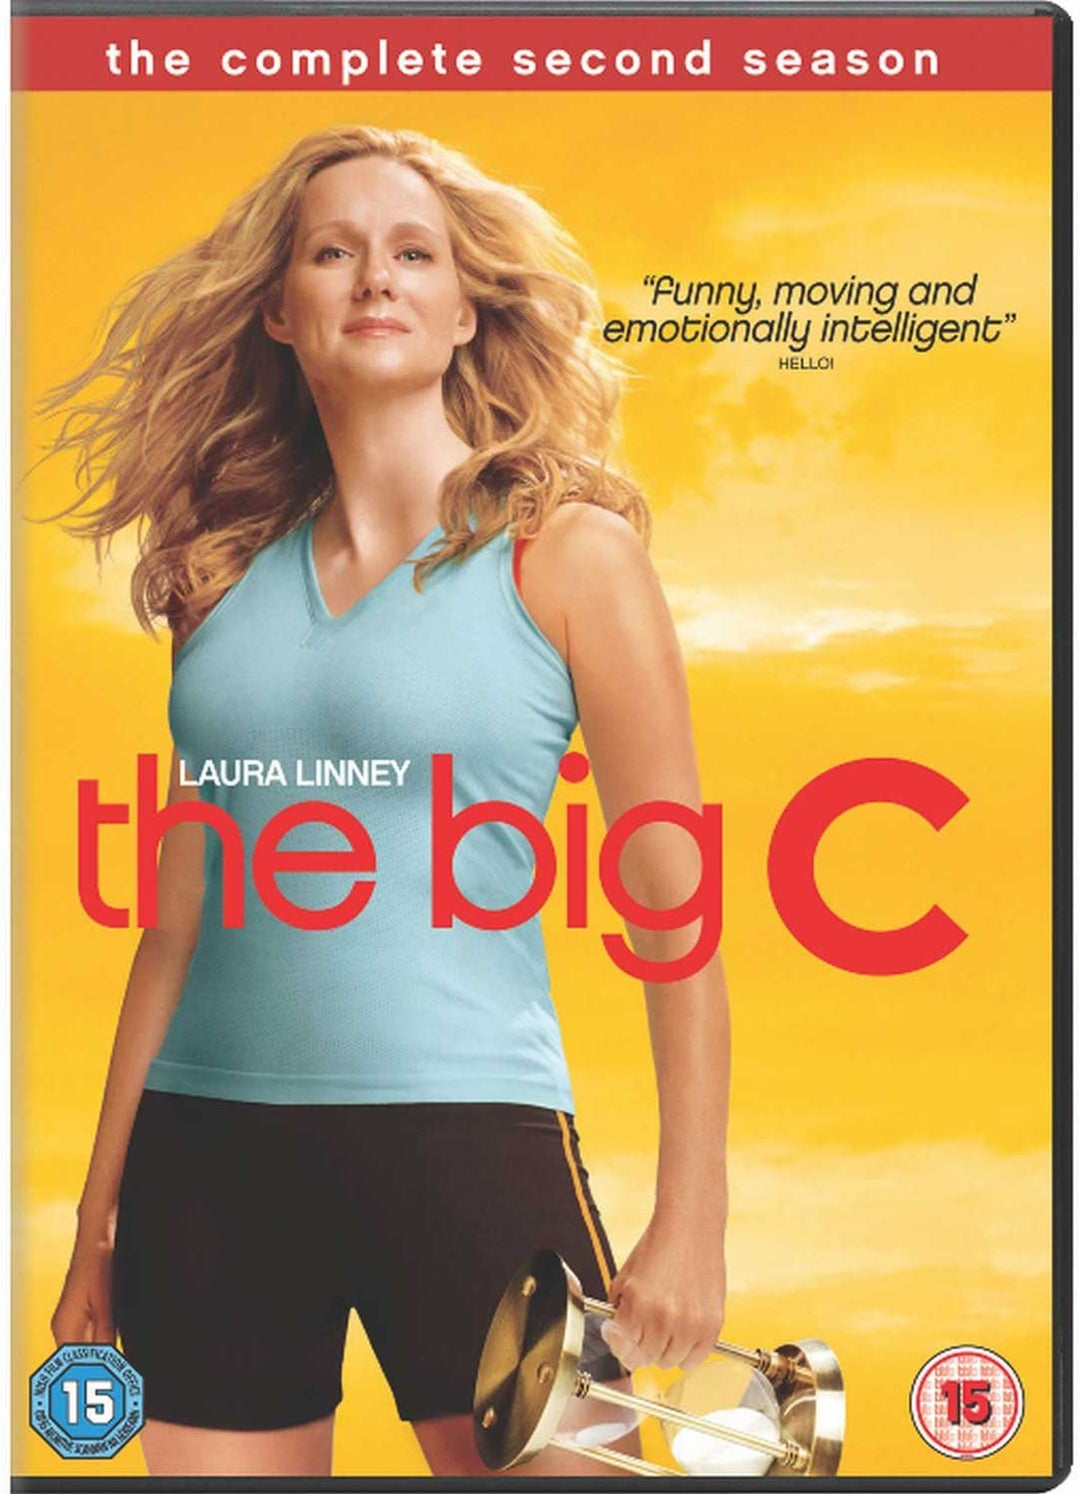 The Big C - Season 2 - Comedy-drama [DVD]